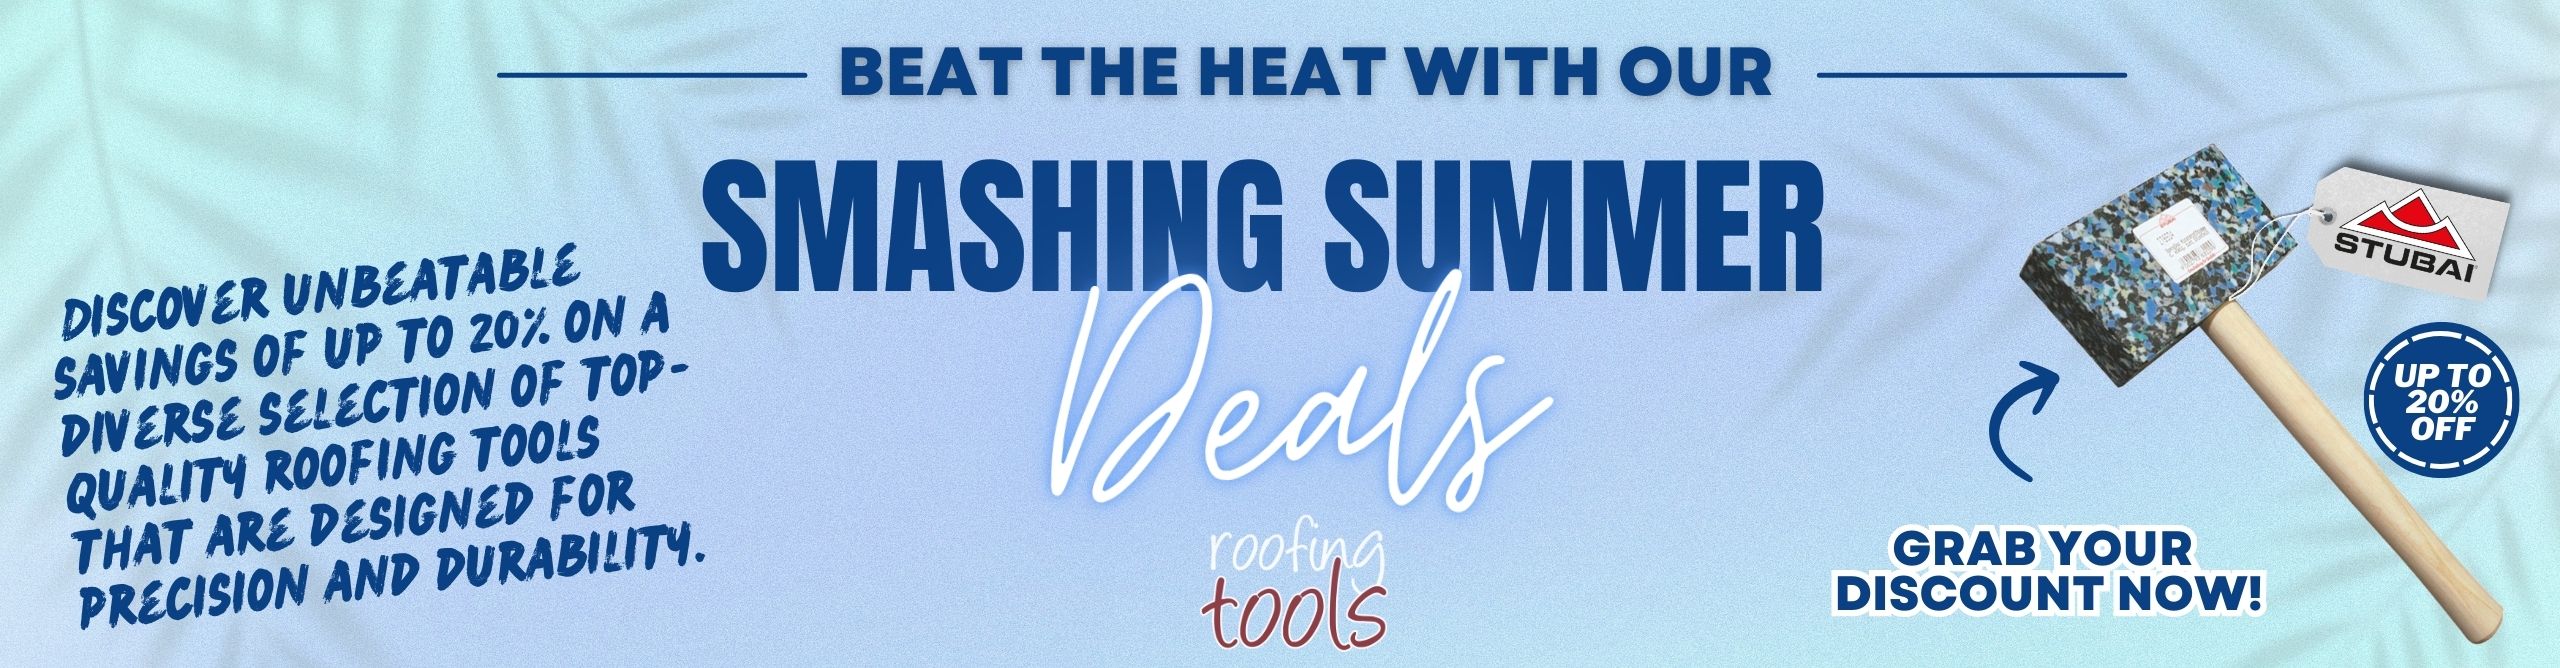 Smashing Summer Deals